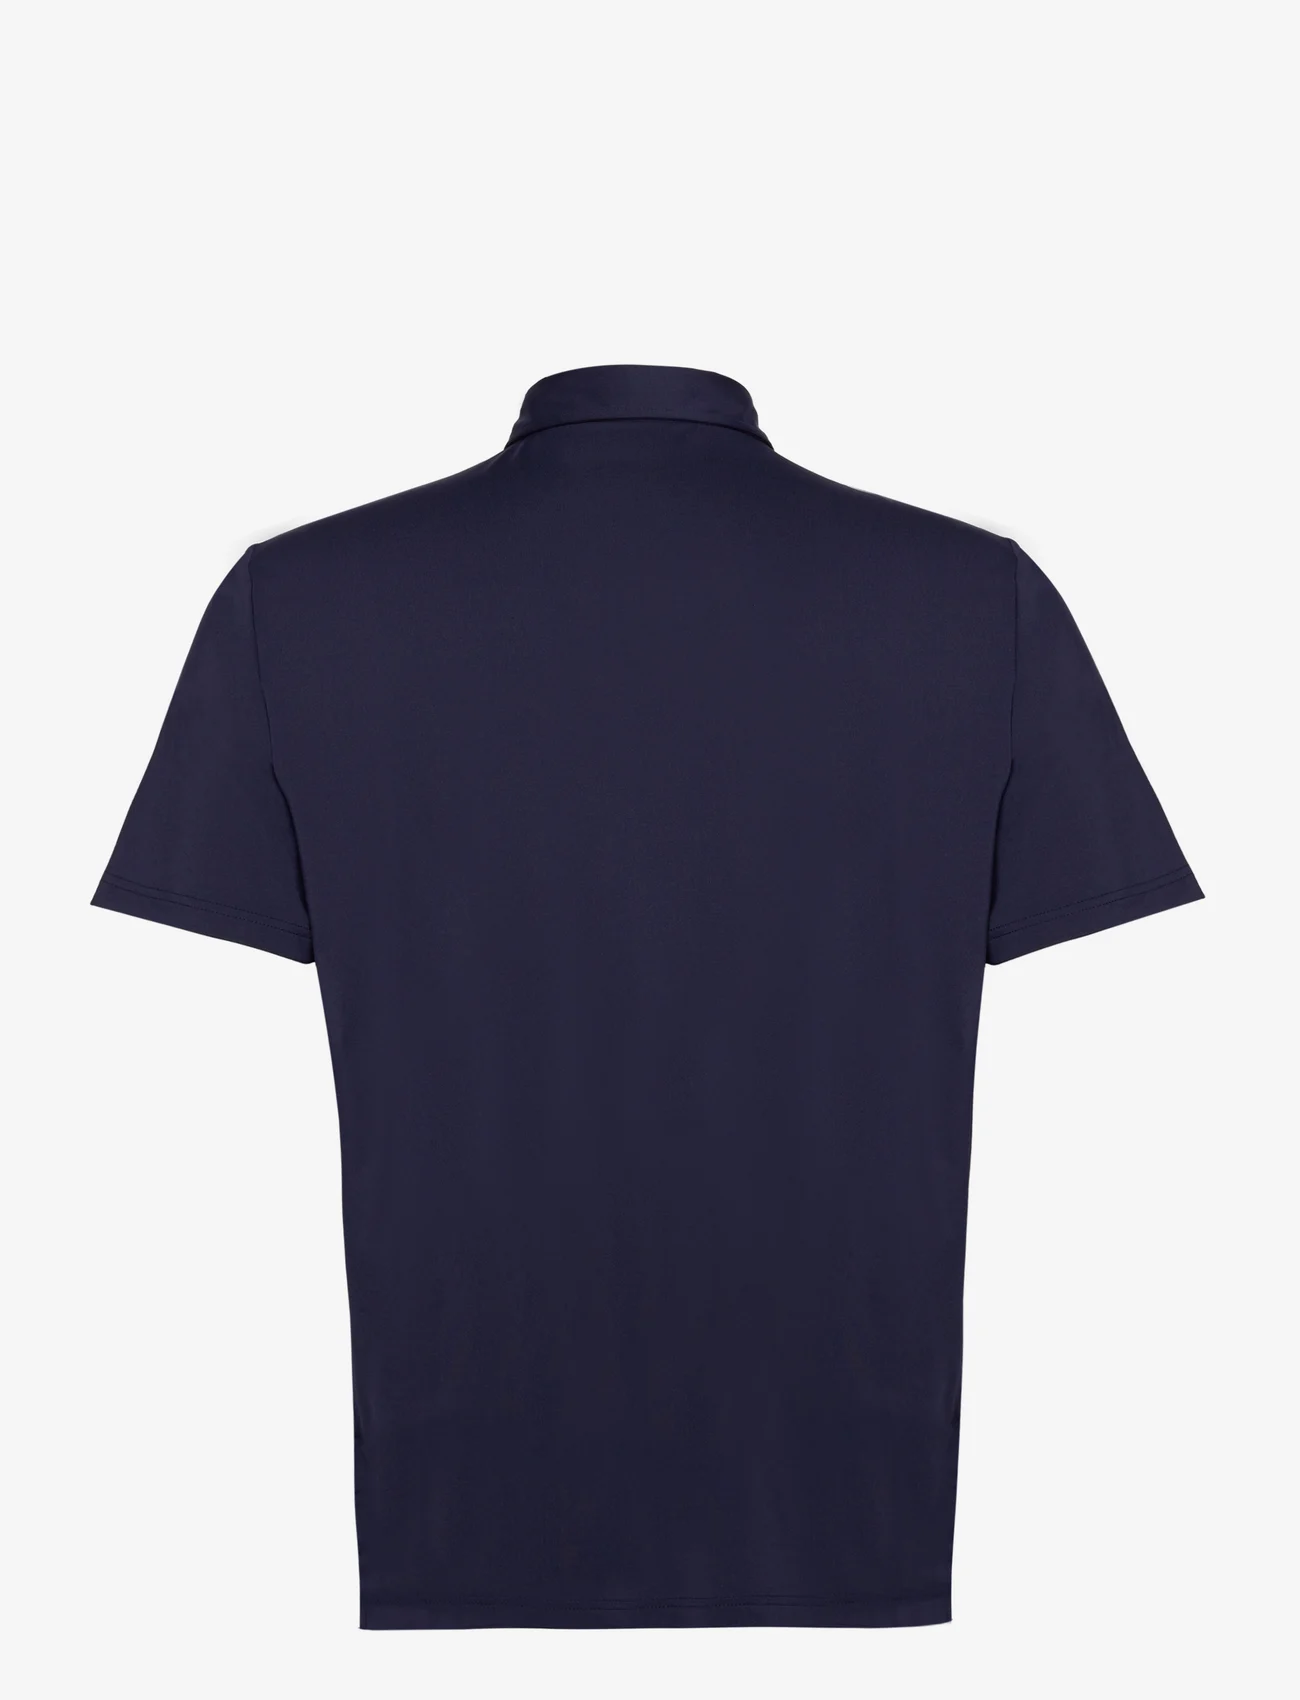 Ralph Lauren Golf - U.S. Ryder Cup Uniform Polo Shirt - megzti laisvalaikio drabužiai - refined navy - 1